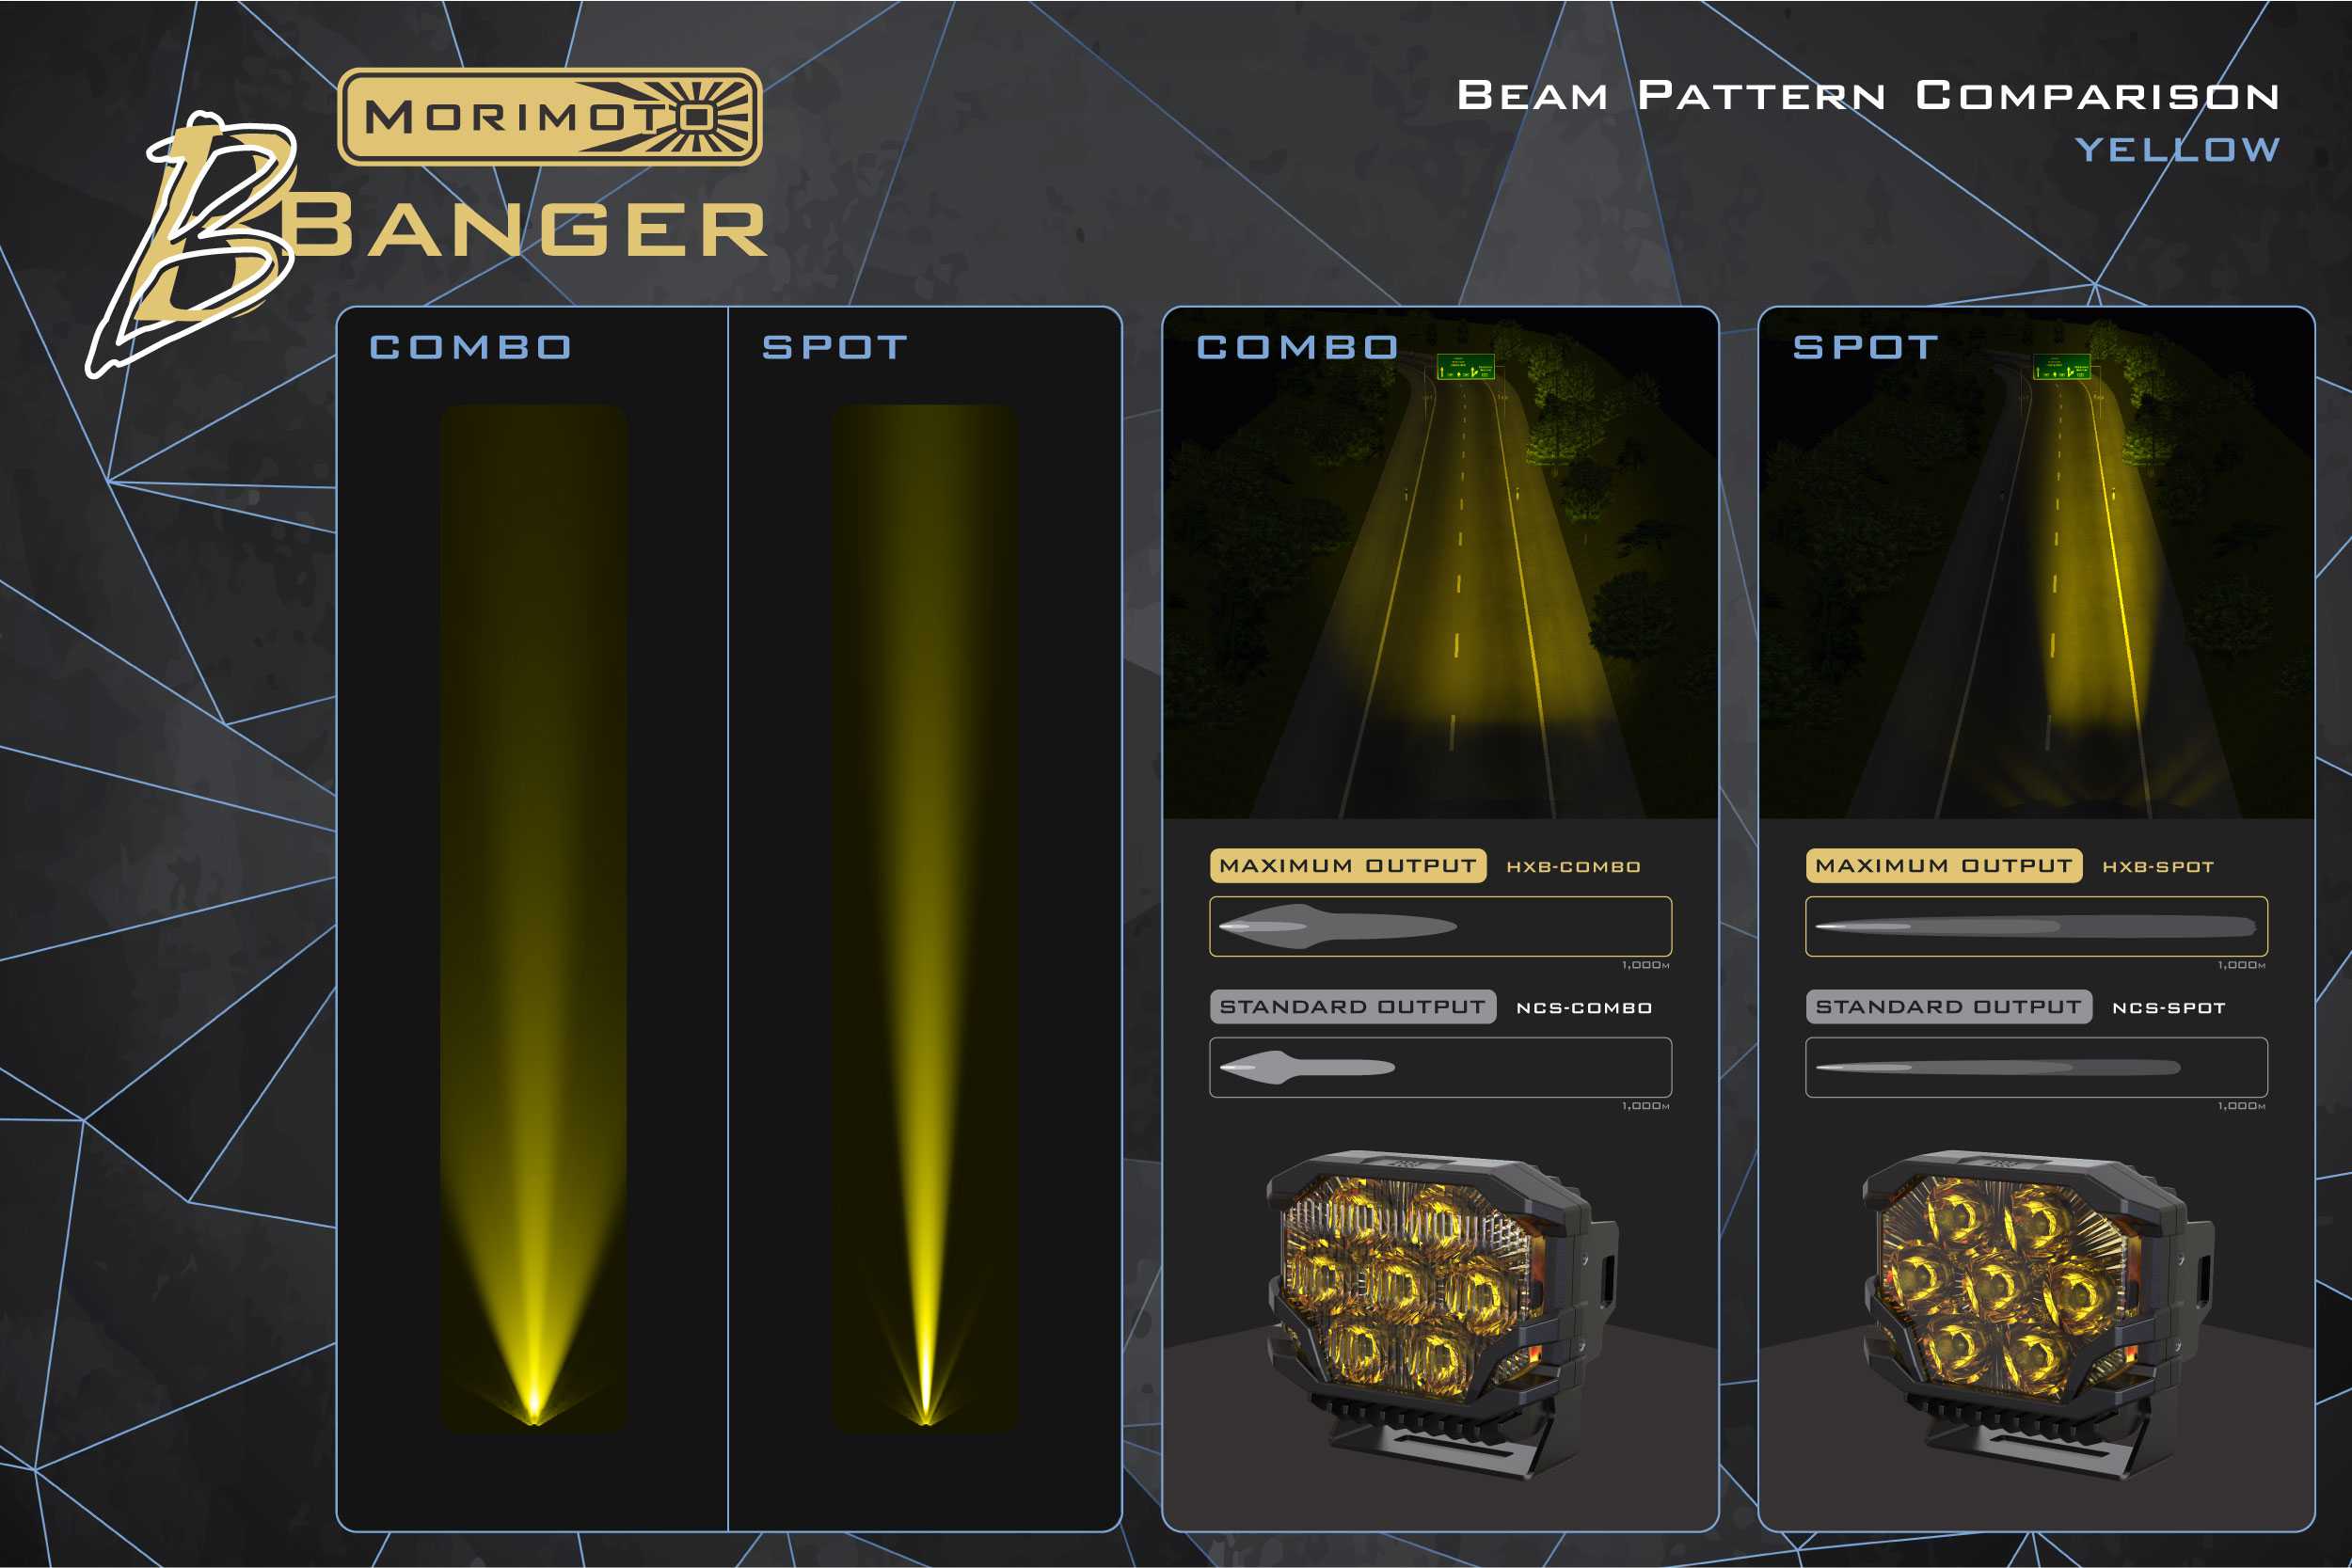 Ram (09-18): Morimoto BigBanger LED Ditch Light System-